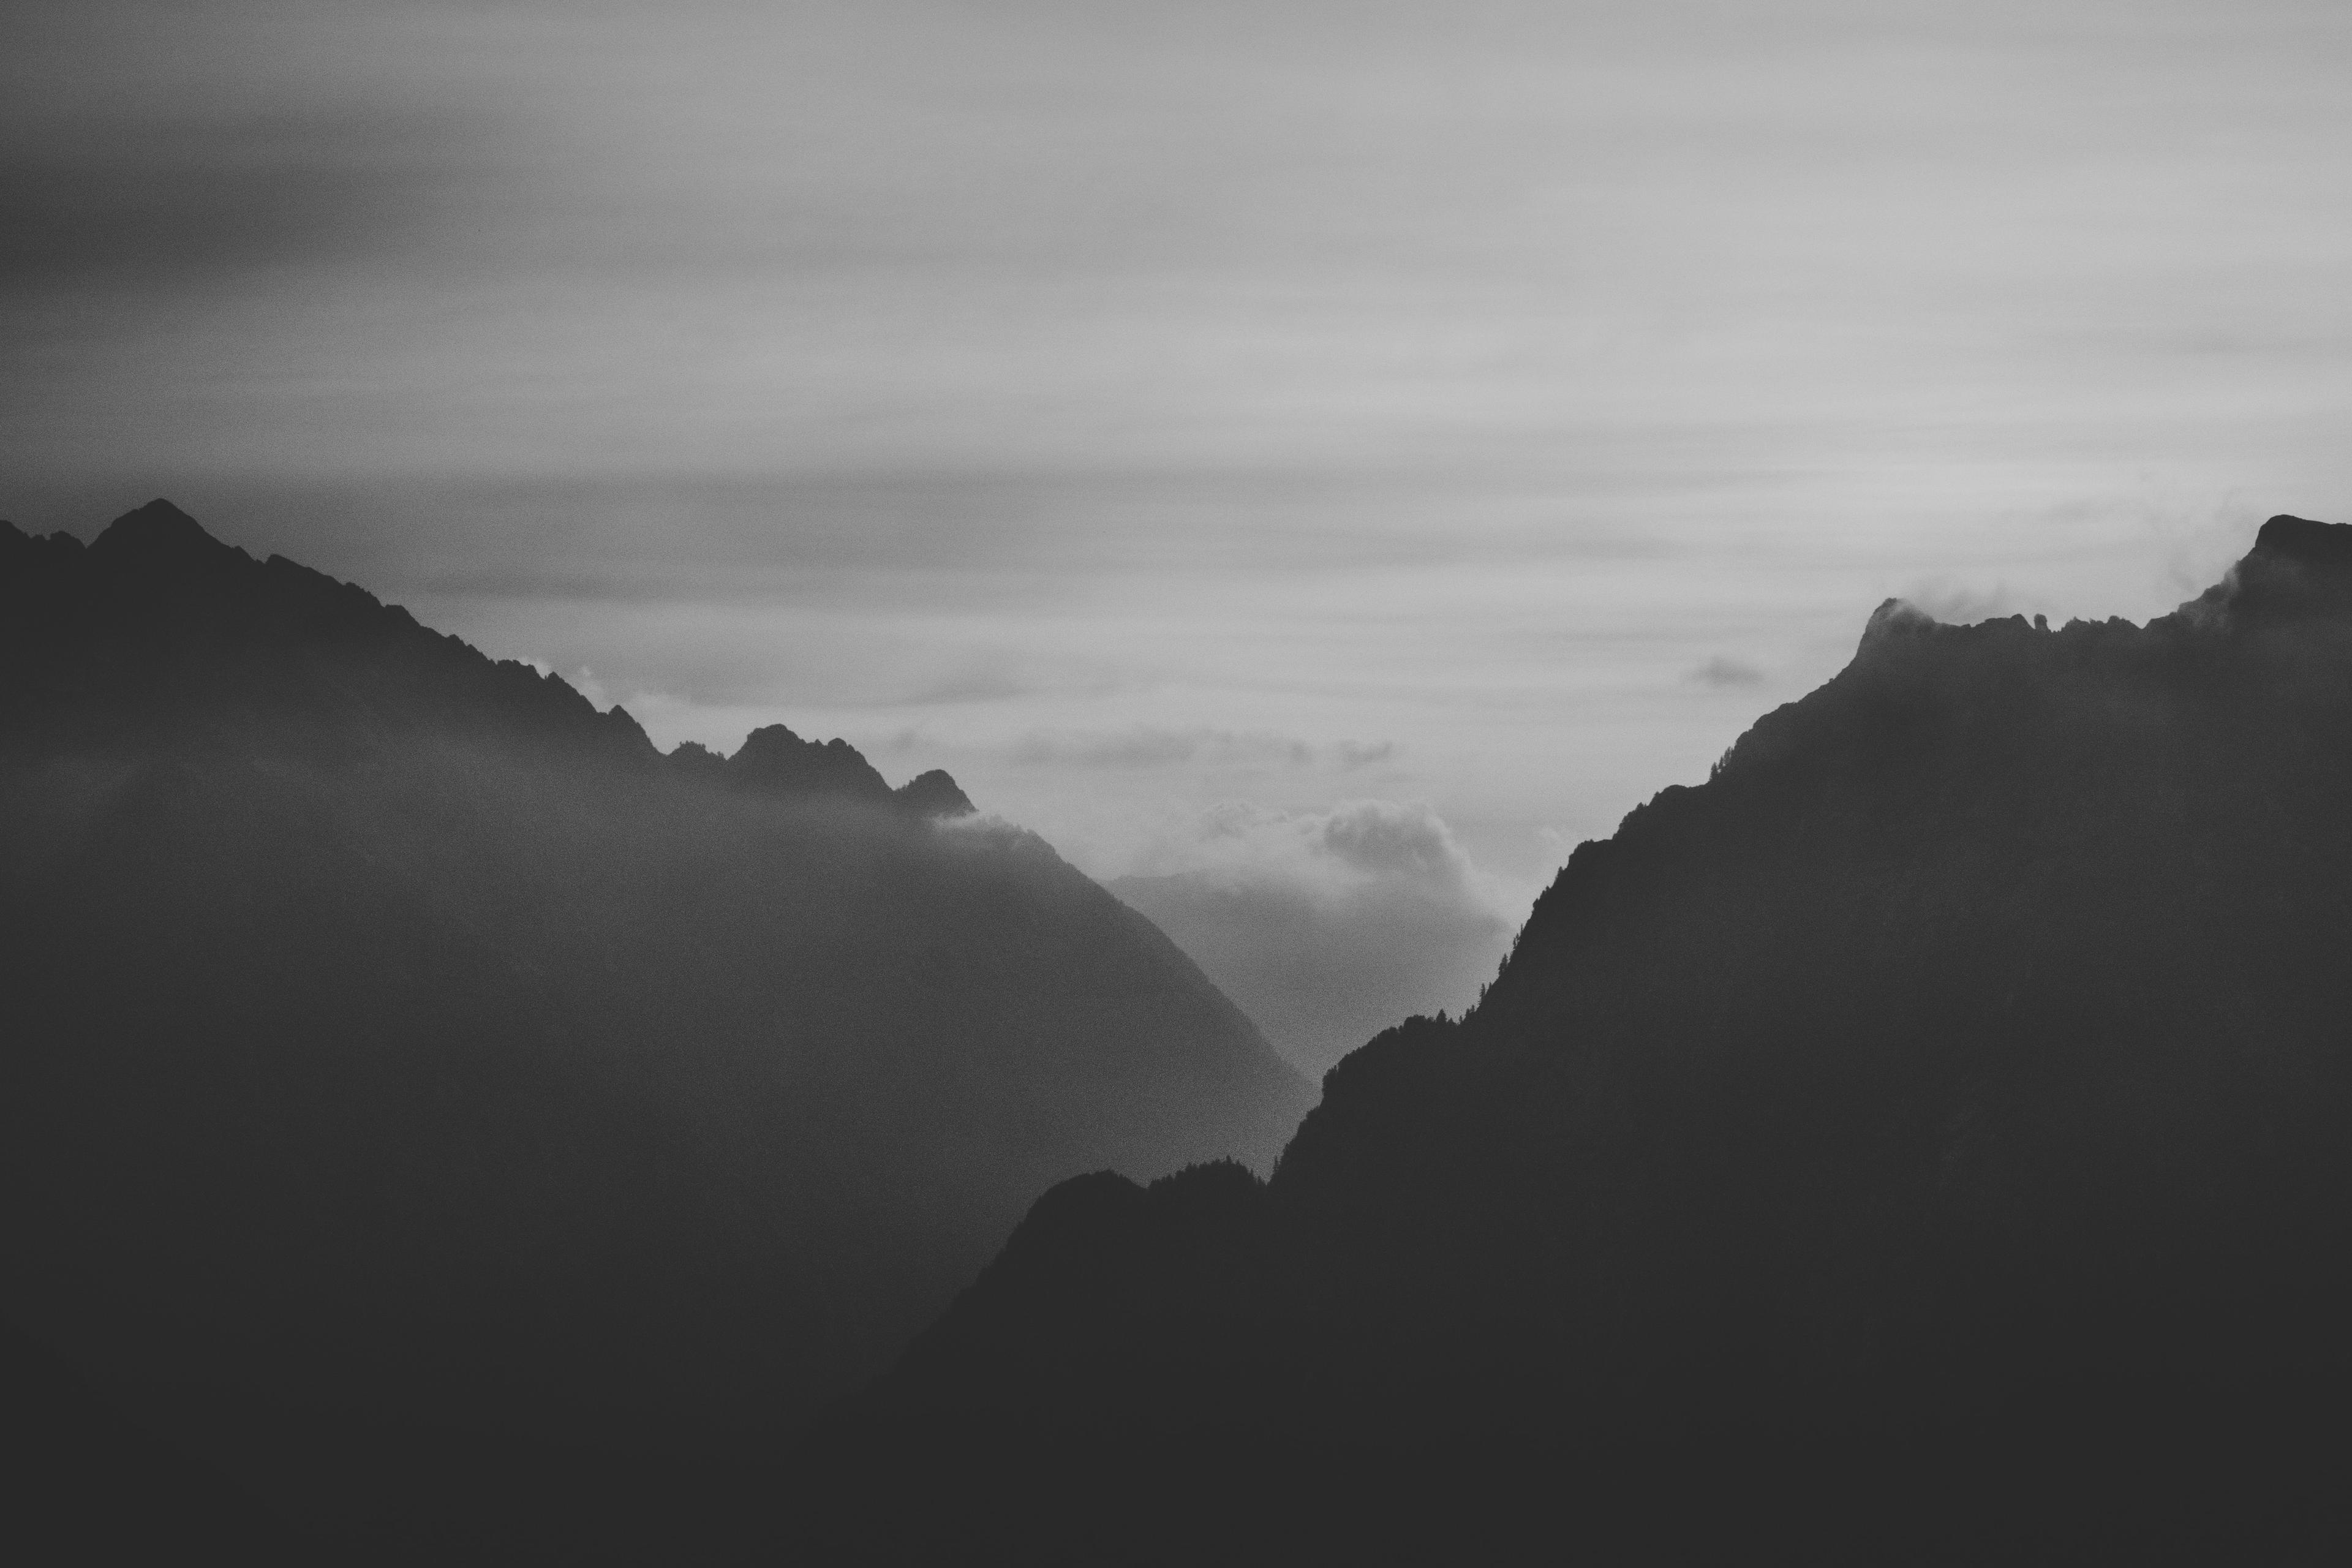 Image of mountains in monochrome by Fabrizio Conti